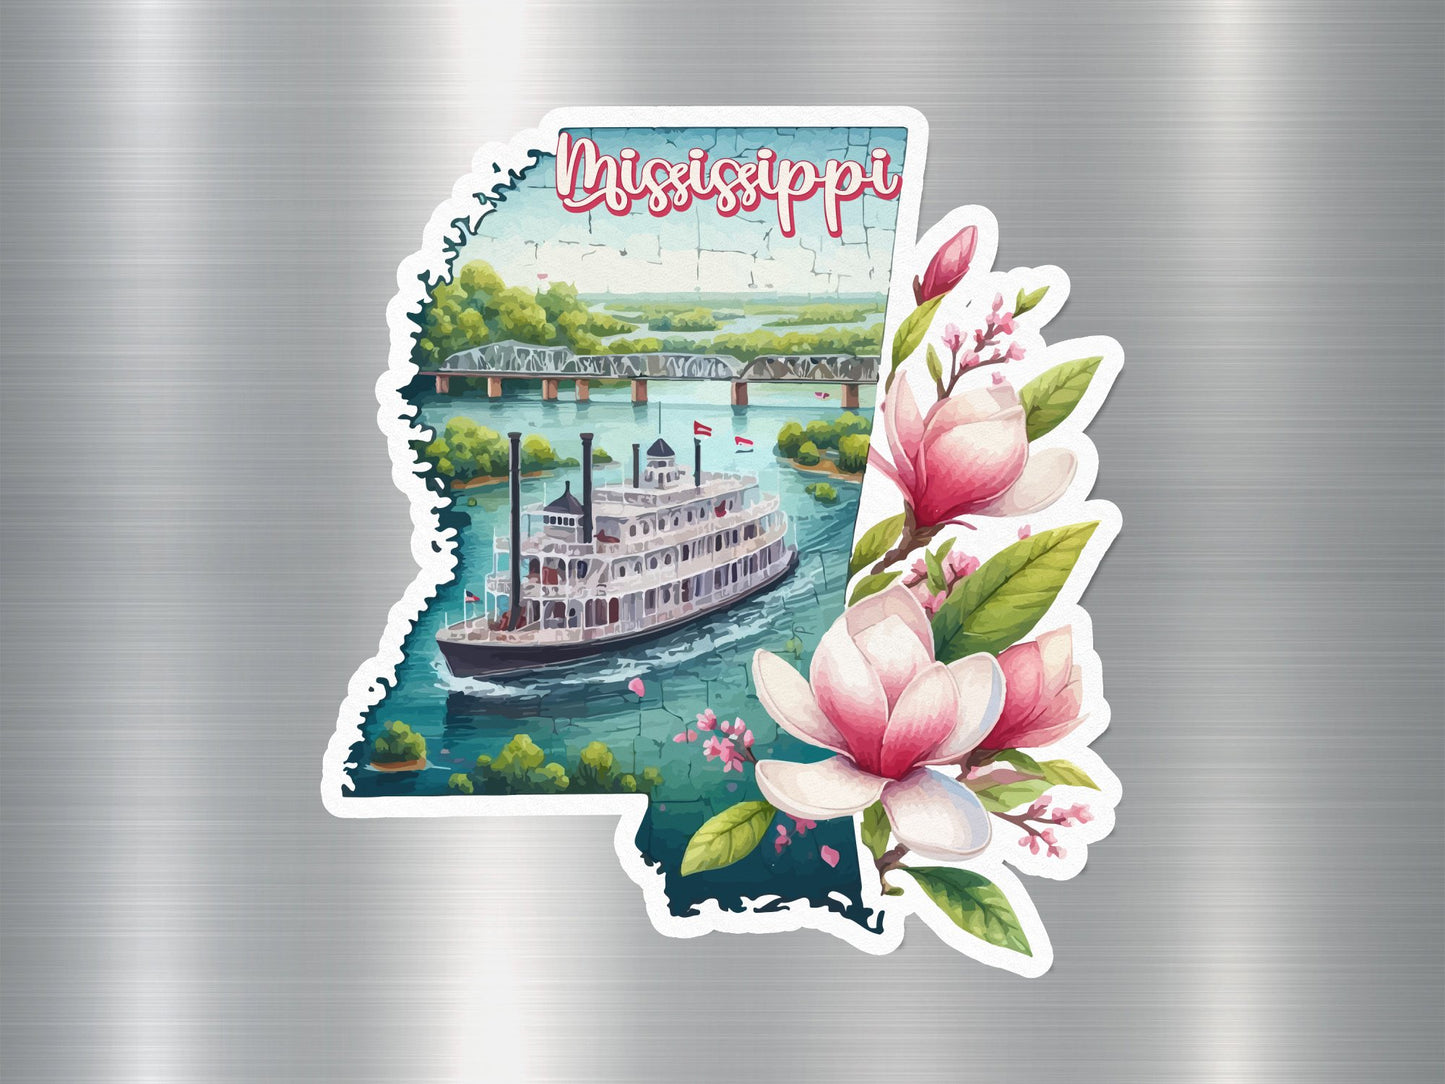 Mississippi State Sticker